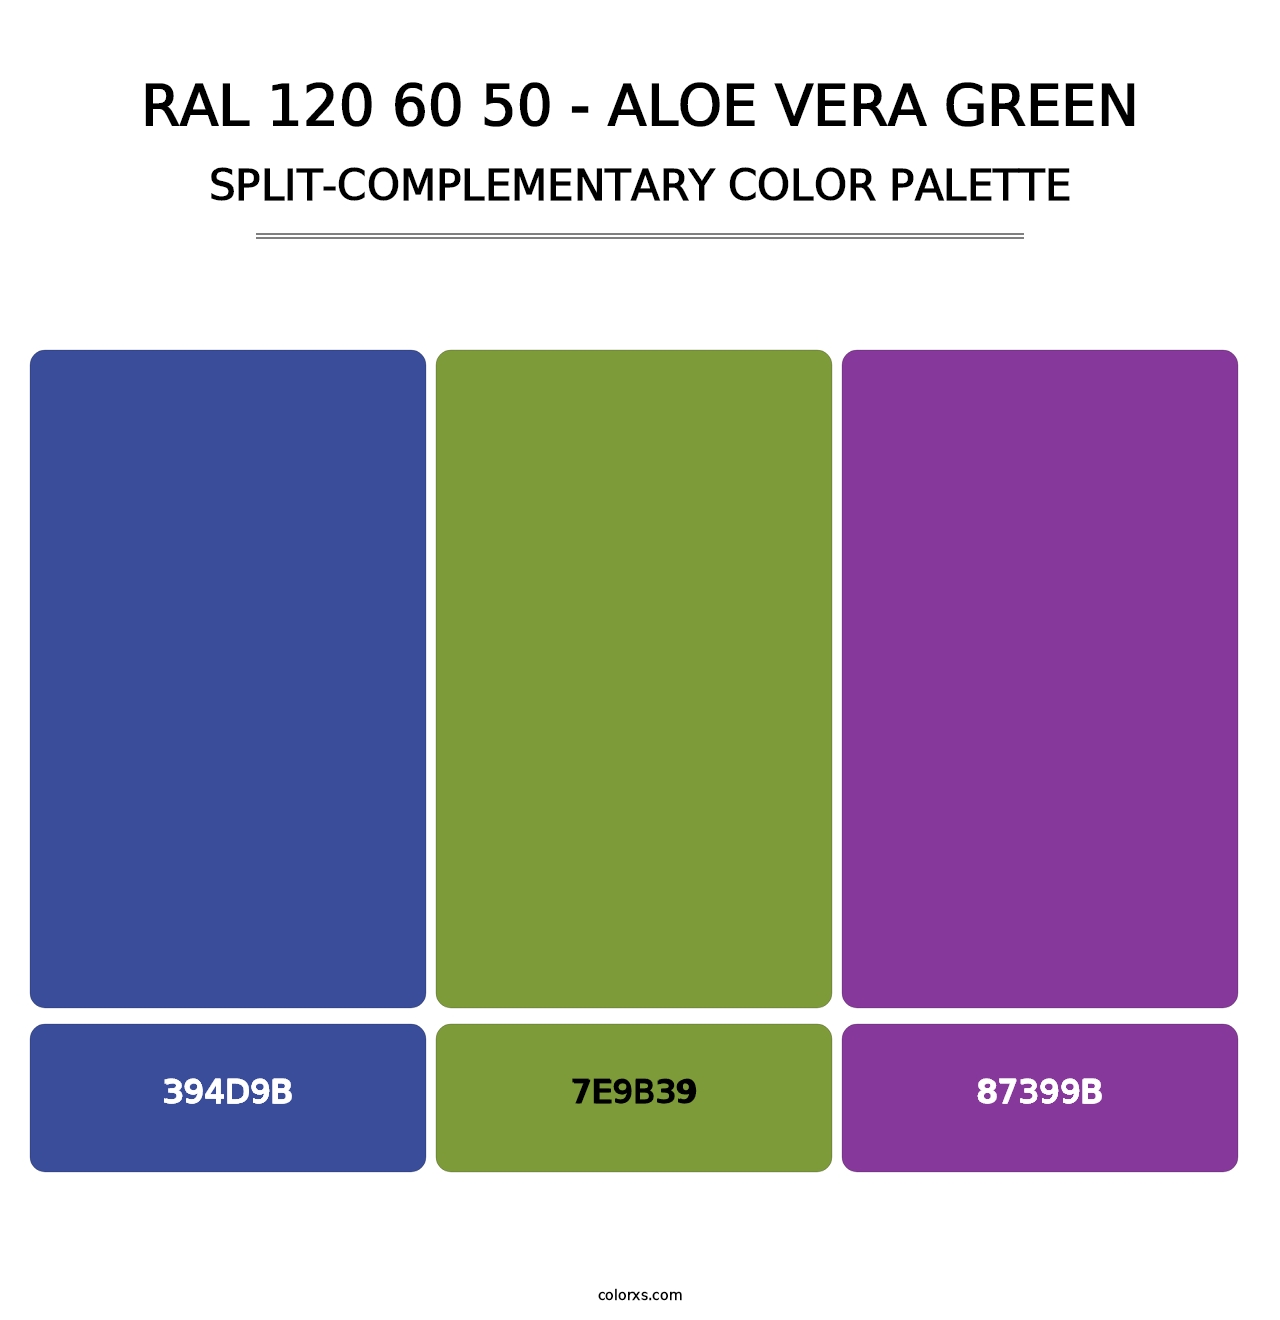 RAL 120 60 50 - Aloe Vera Green - Split-Complementary Color Palette